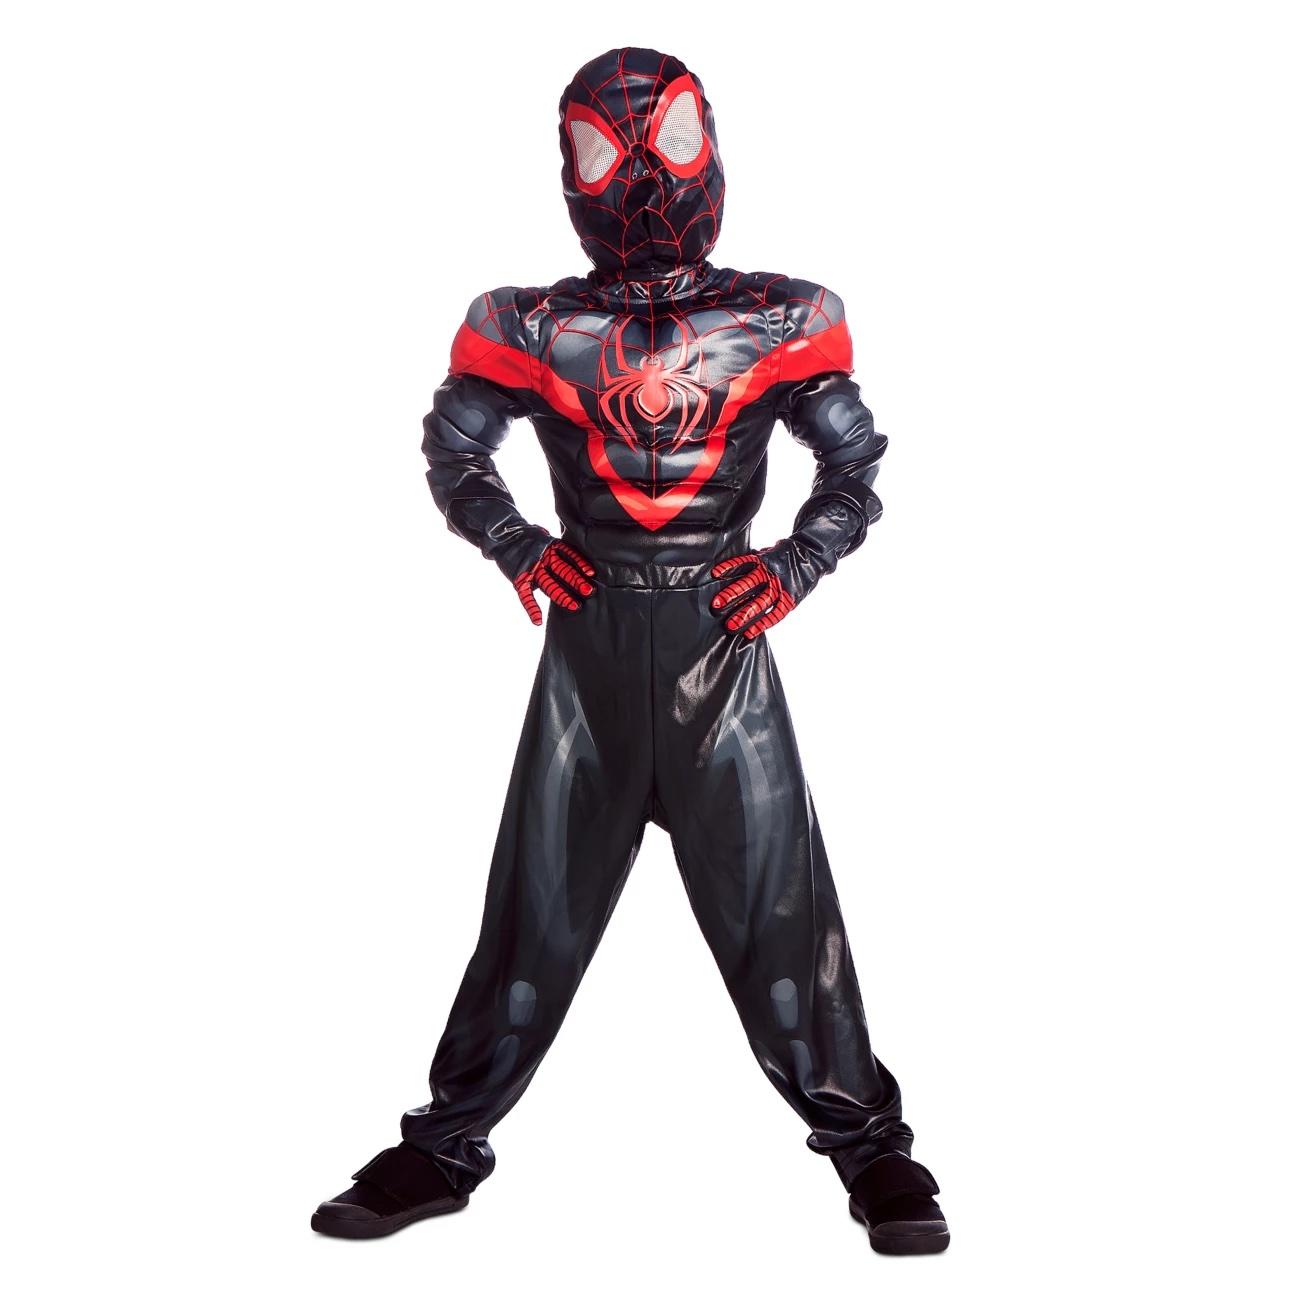 Miles Morales Spider-Man costume